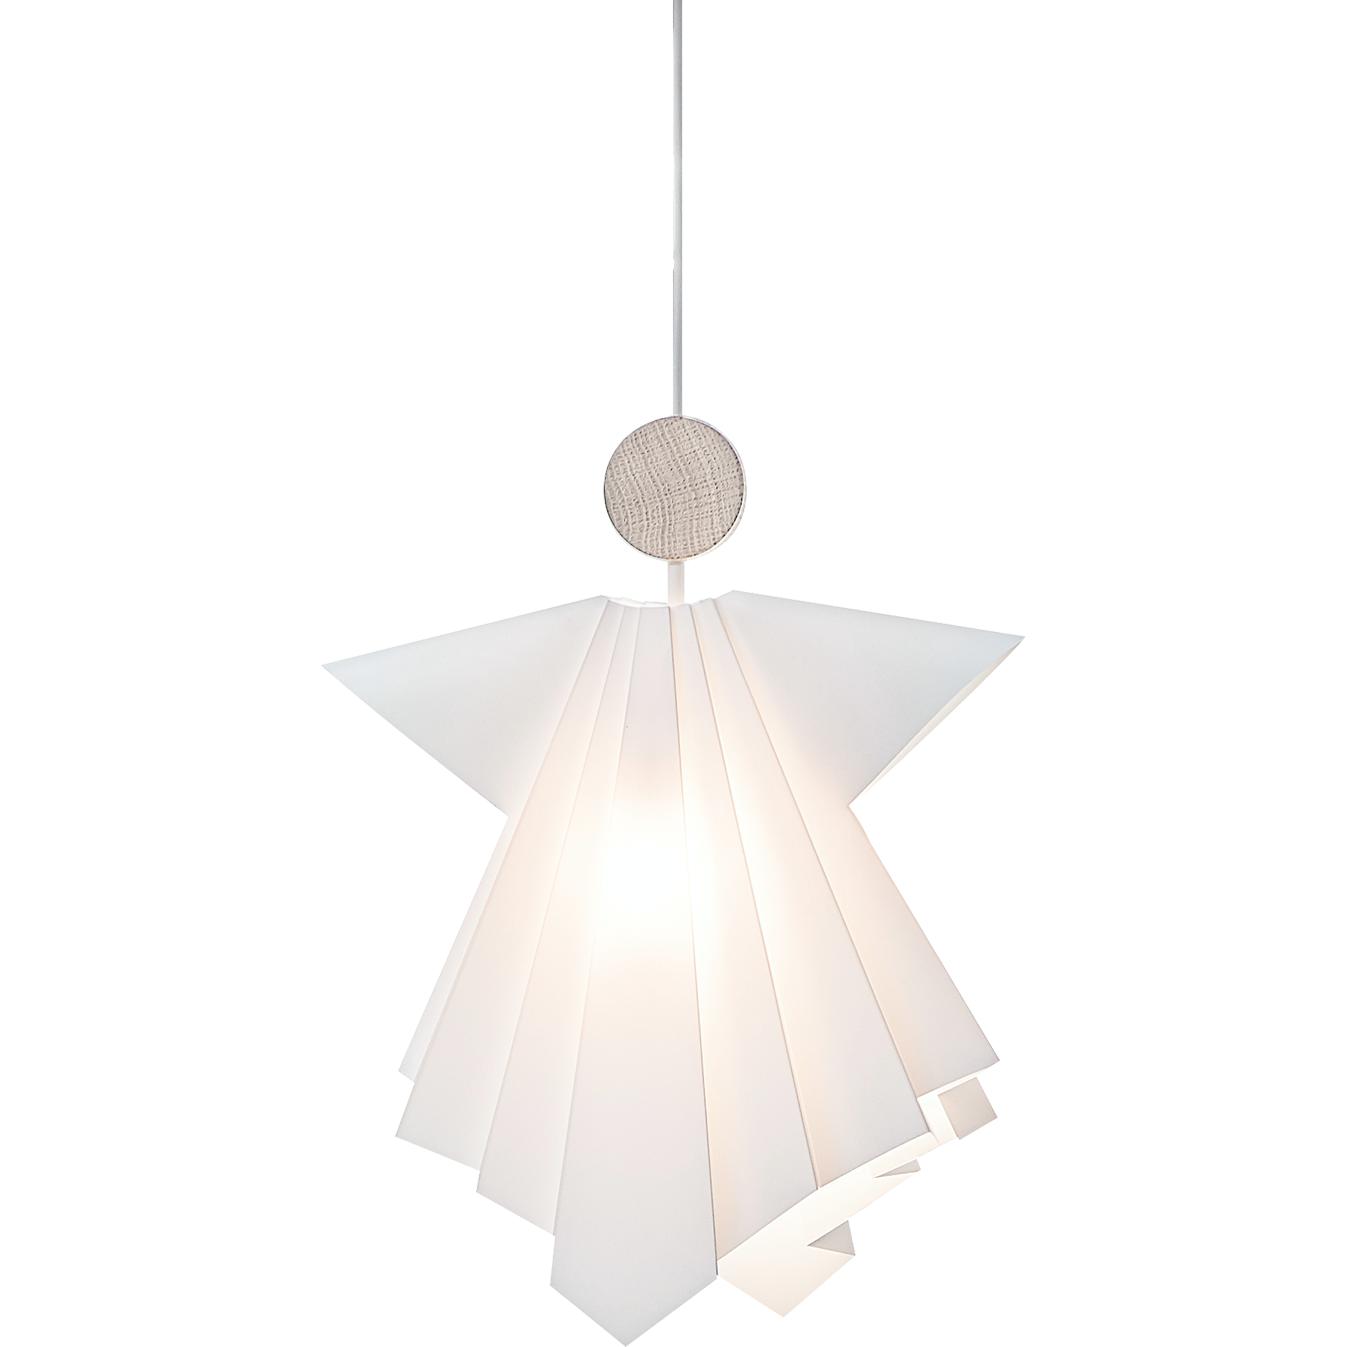 LE KLINT Uriel Engel hanger lamp, XS